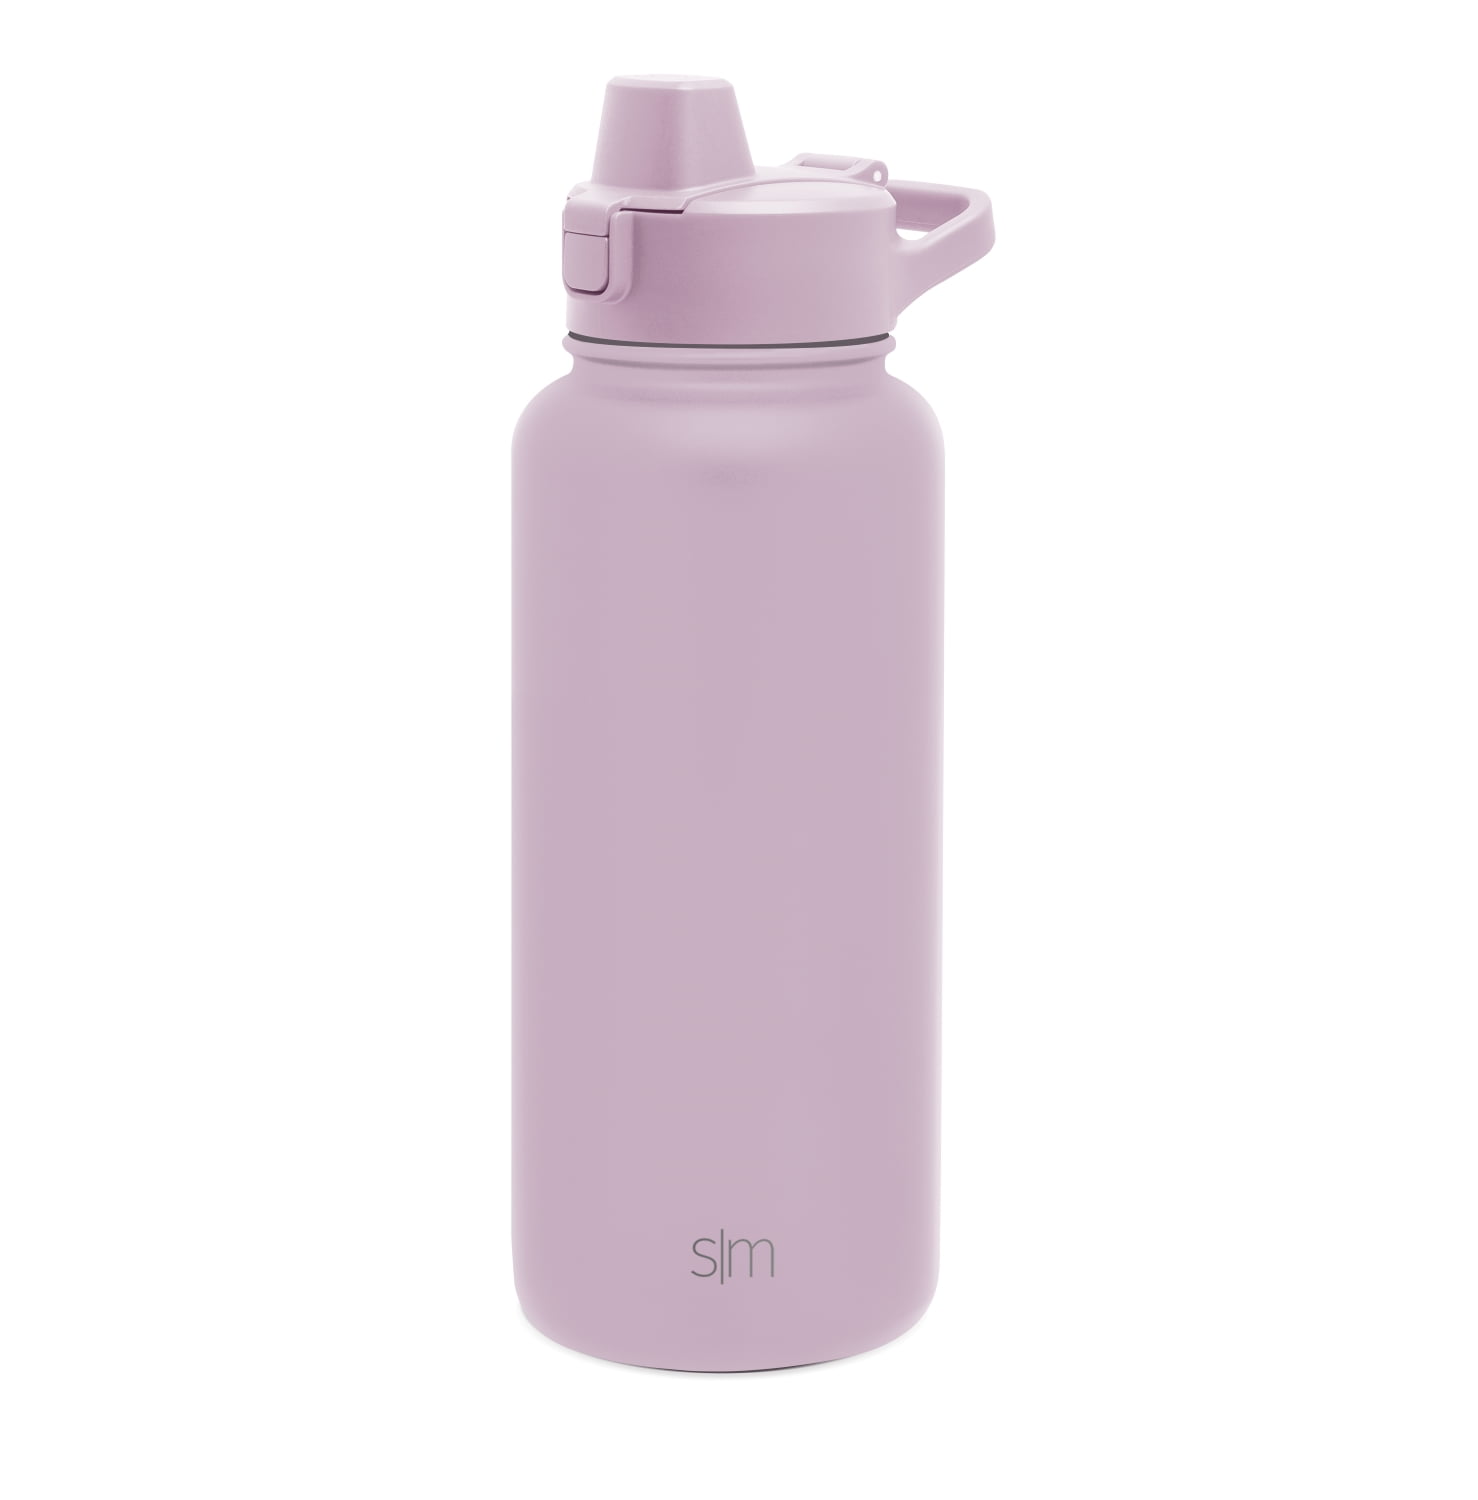 Milk Maker 32 oz Water Bottle — TheLittleMilkBar